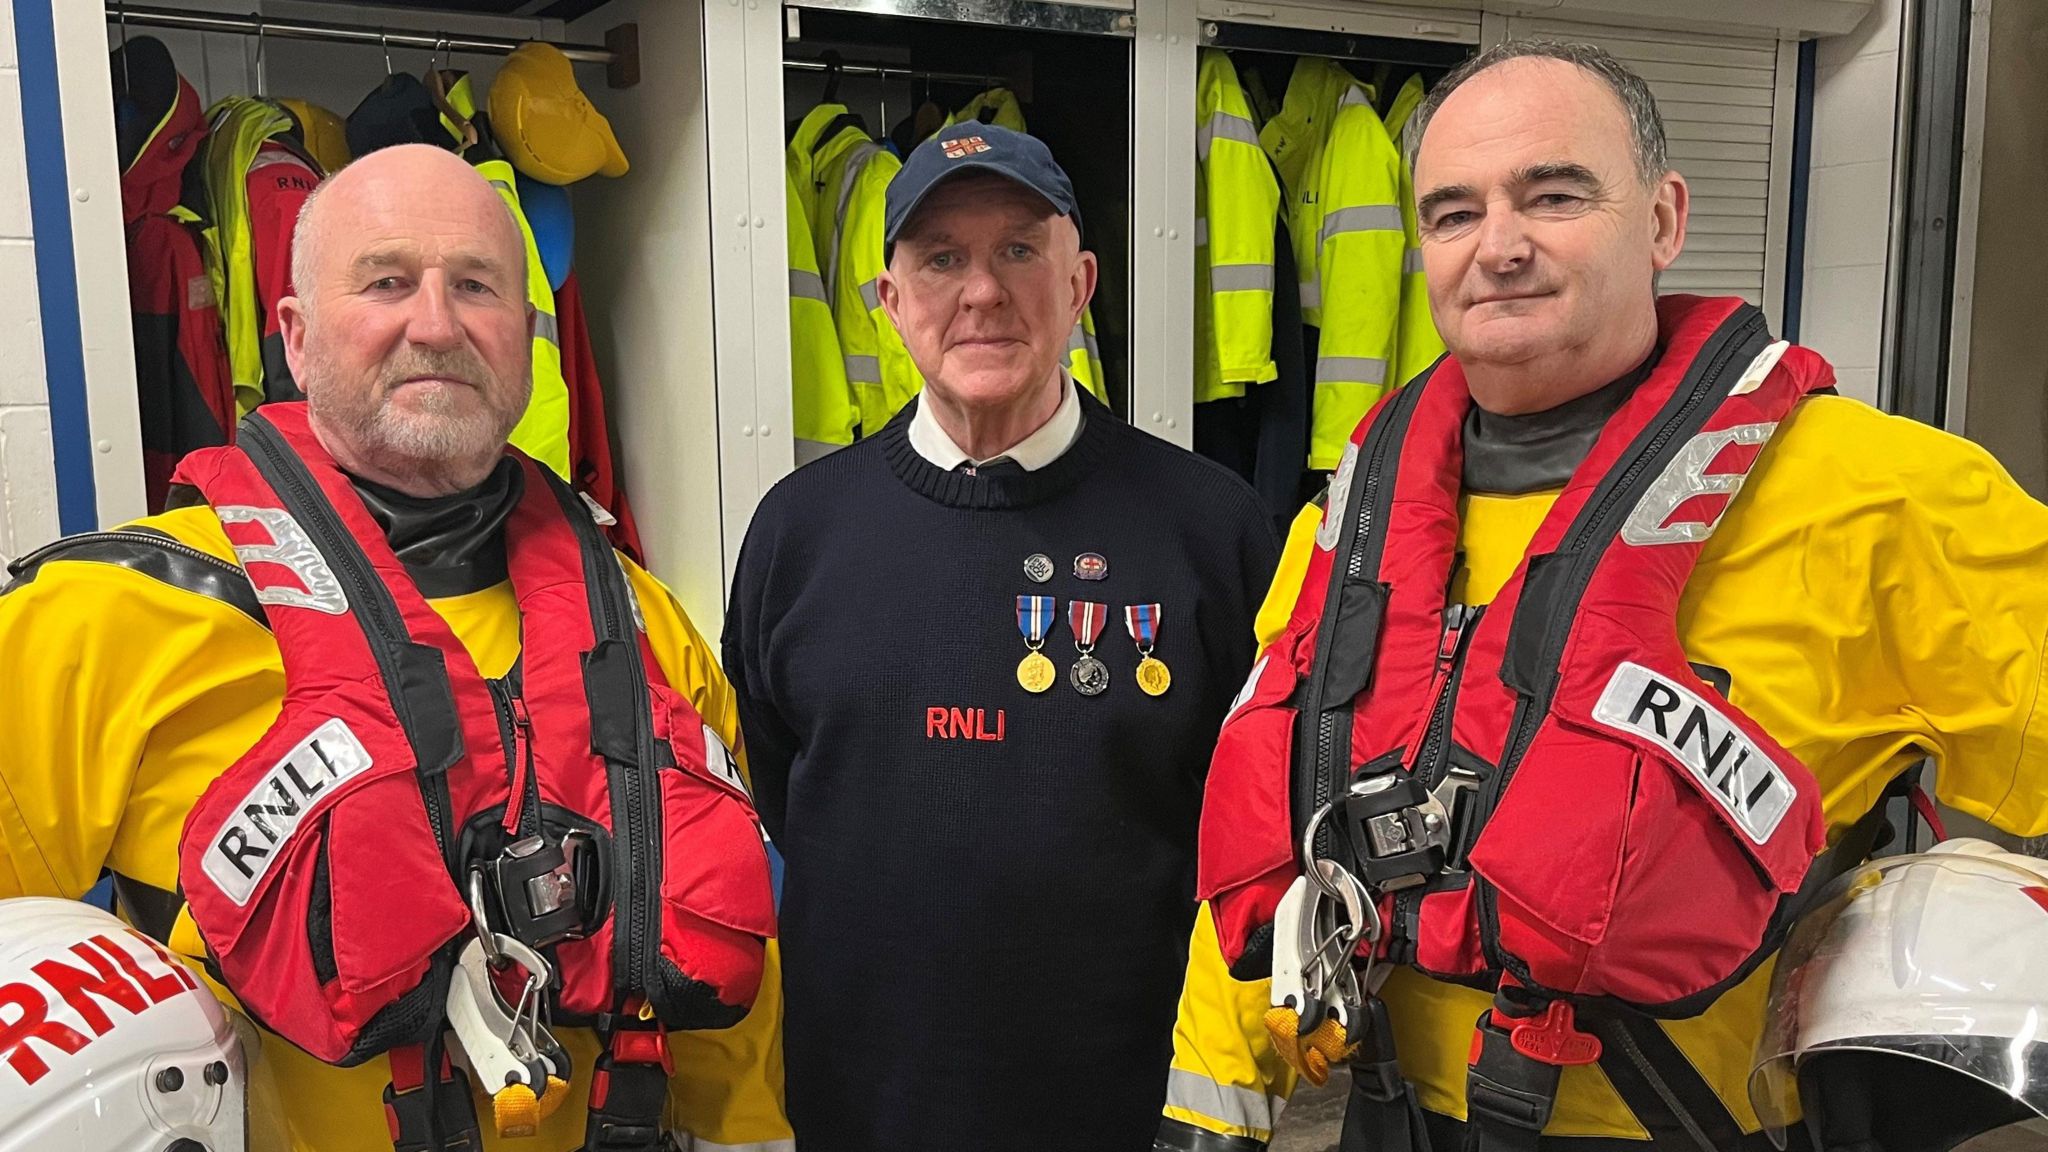 RNLI volunteers in boathouse wearing lifejackets